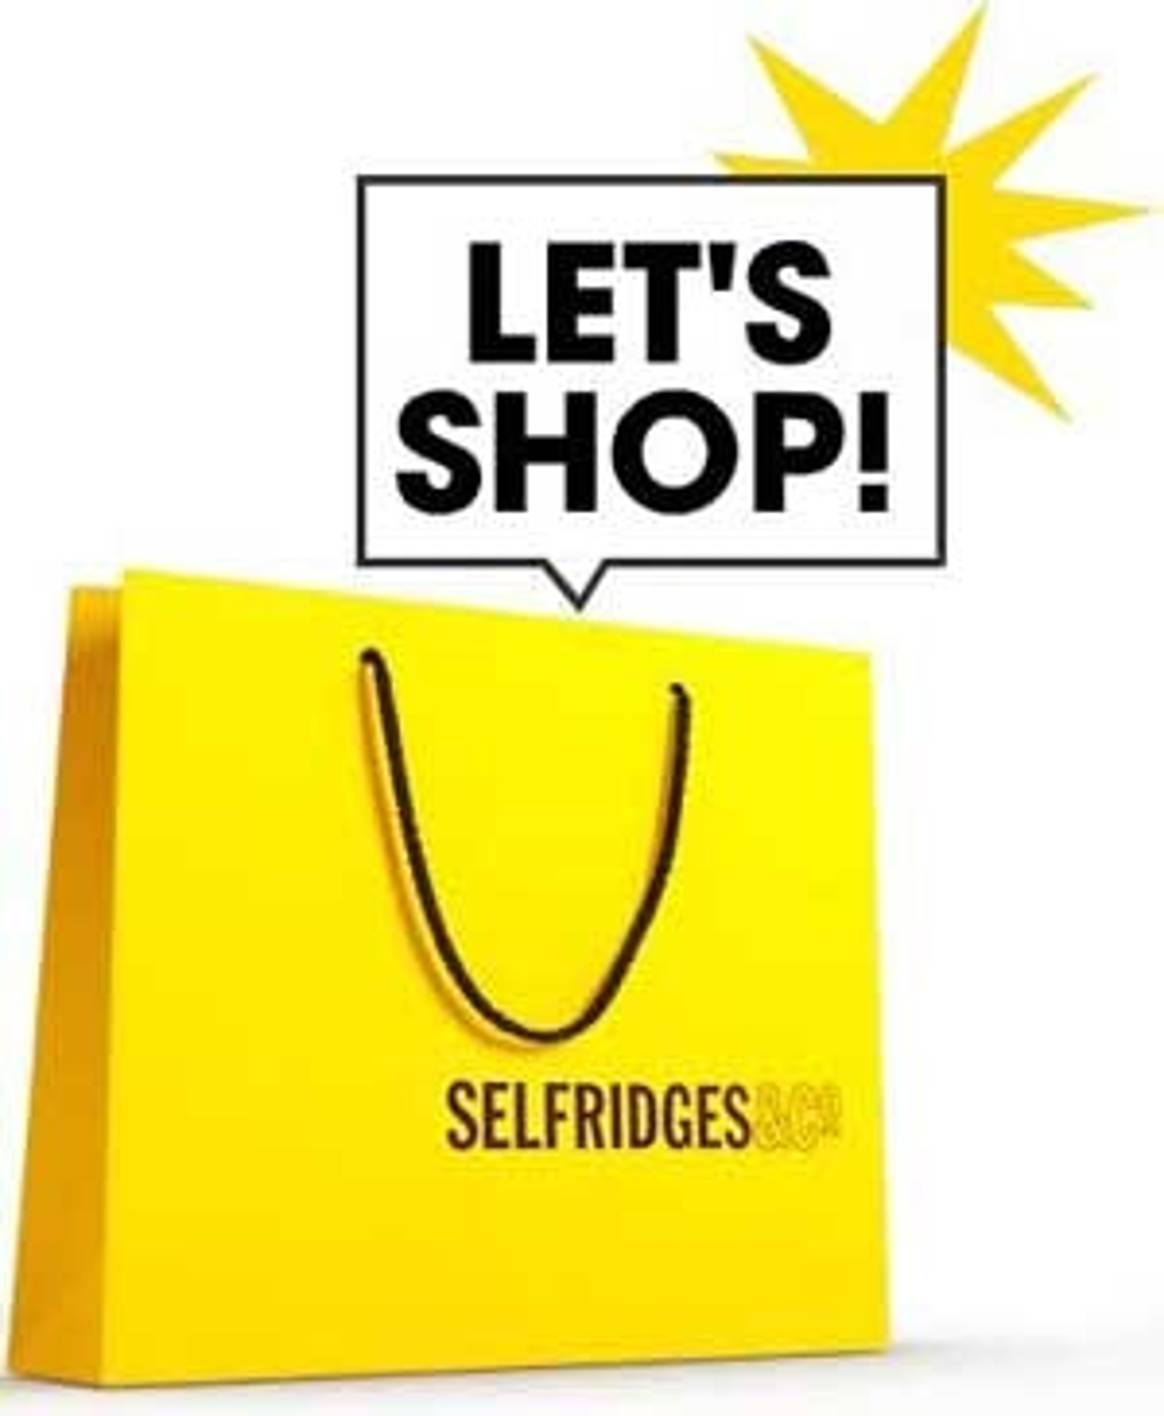 Is Selfridges top of the shops?